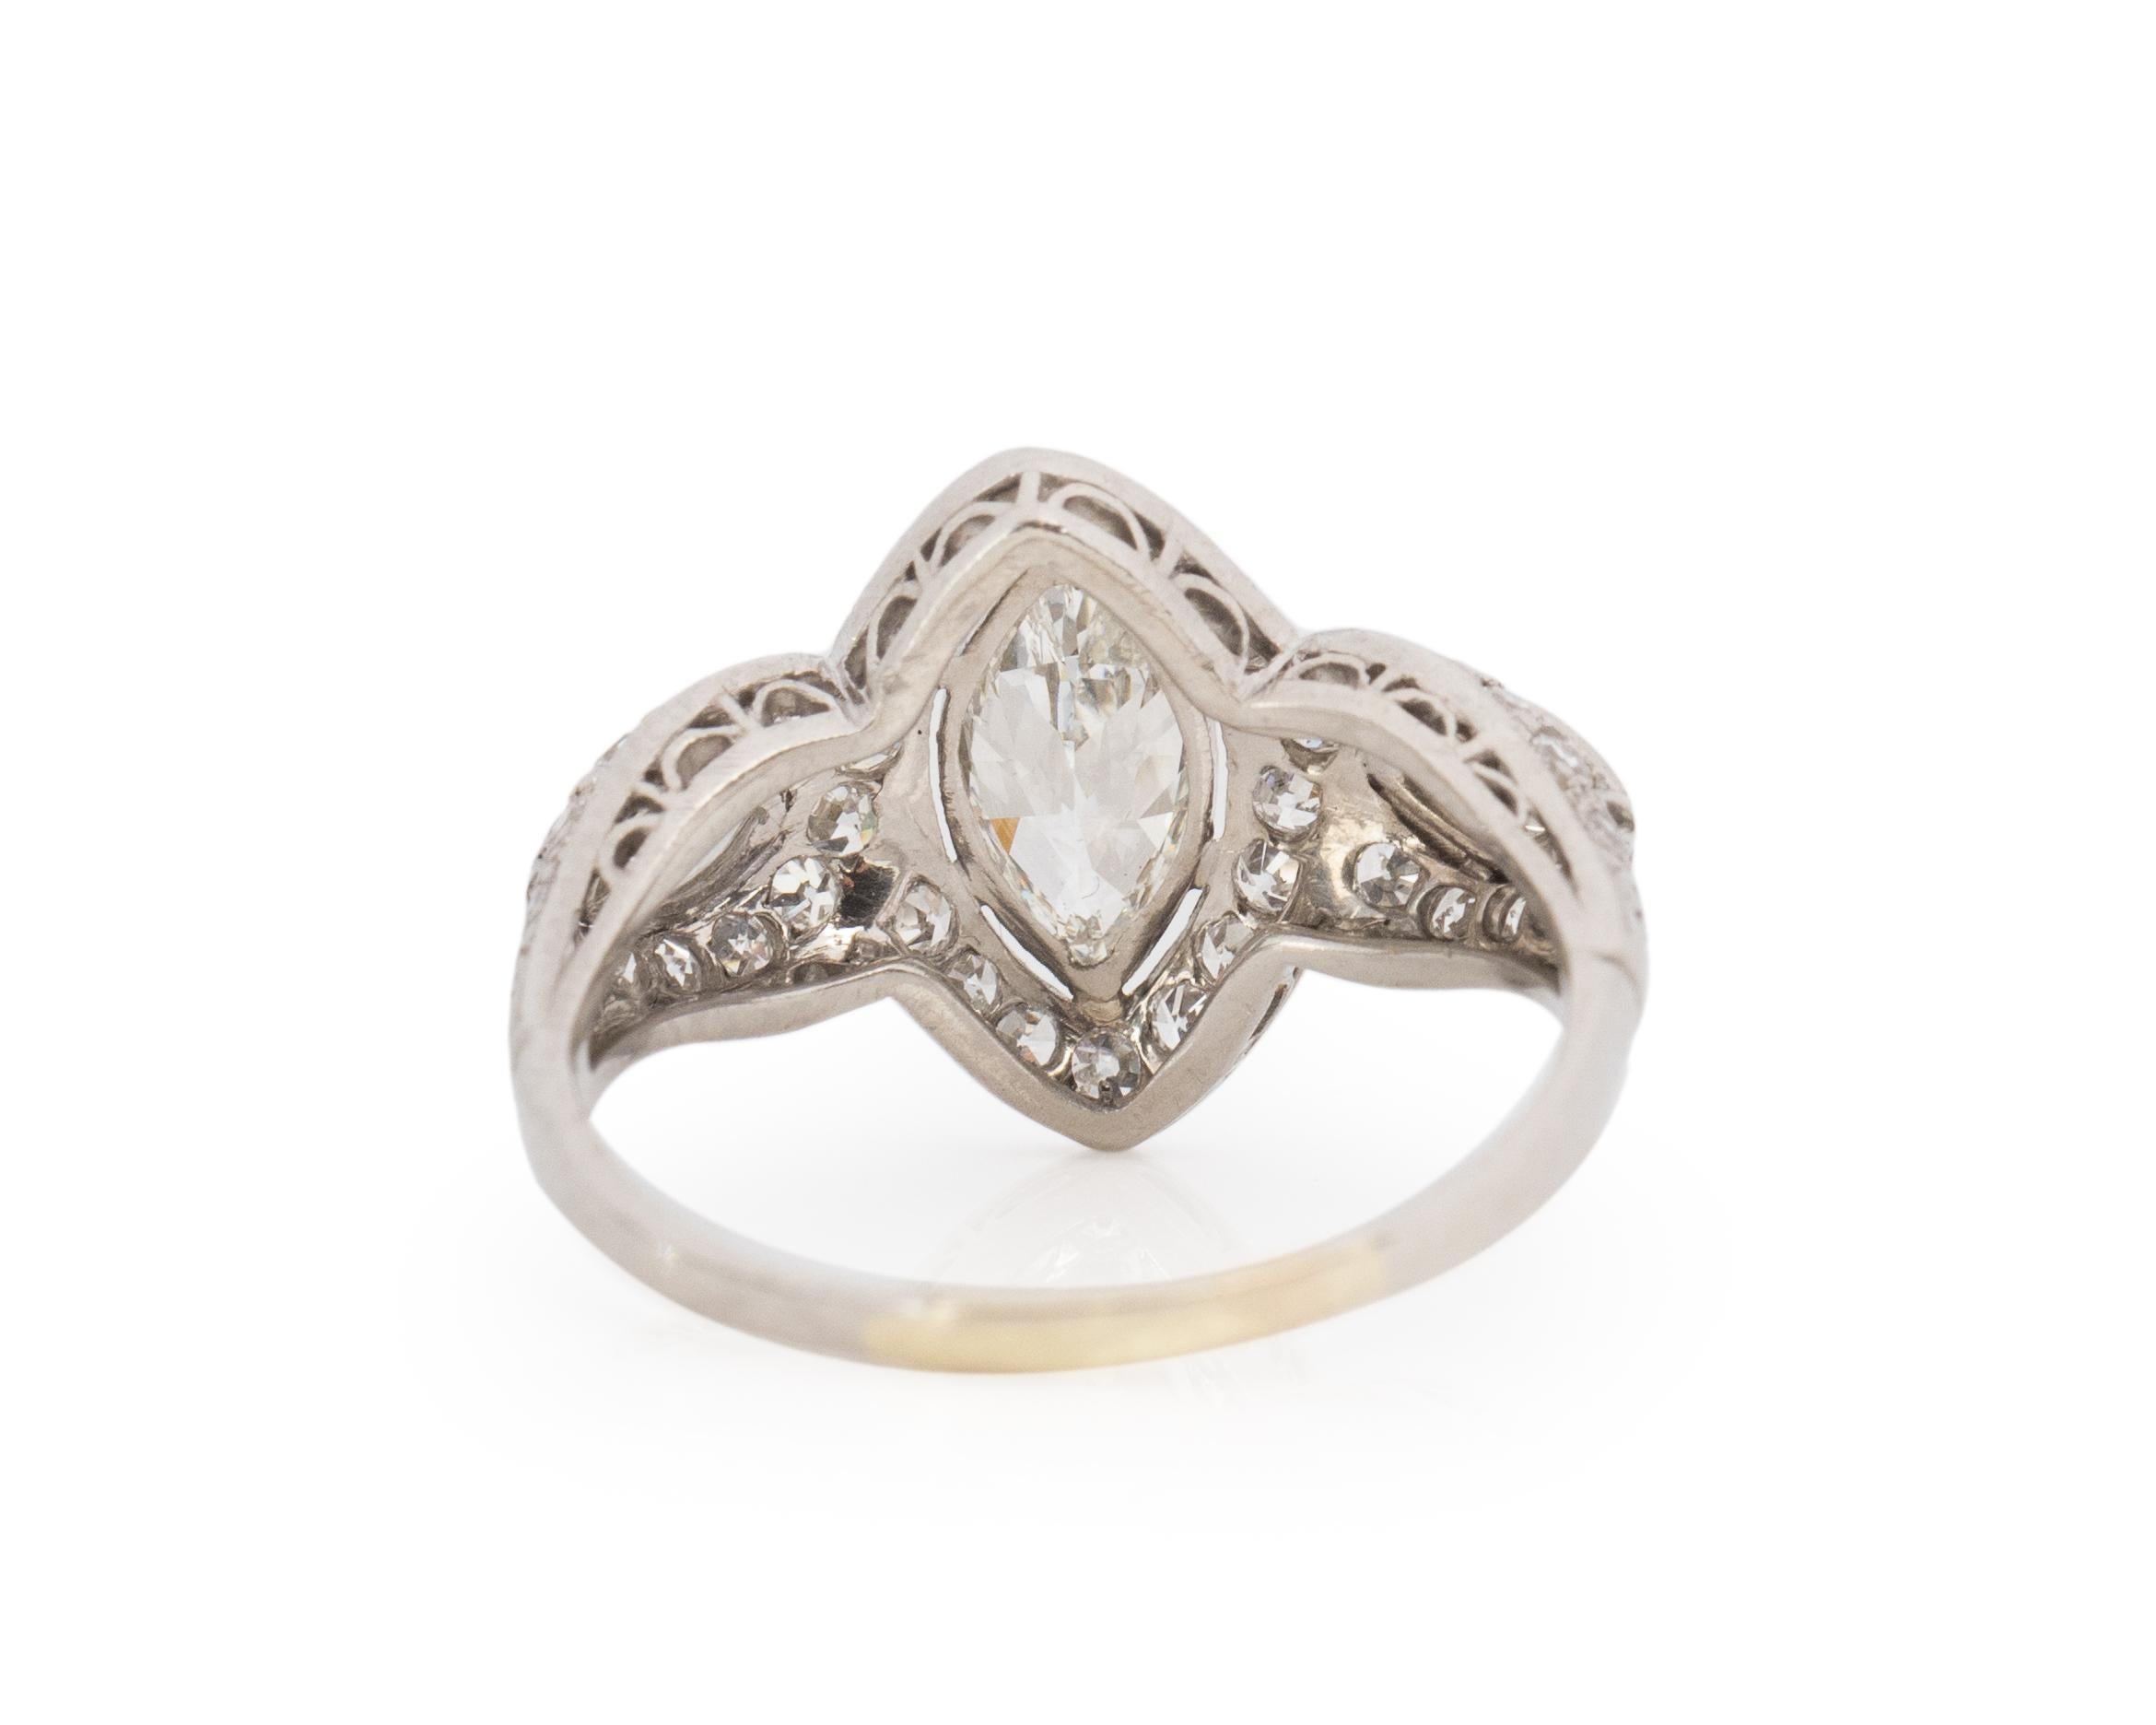 80 carat diamond ring